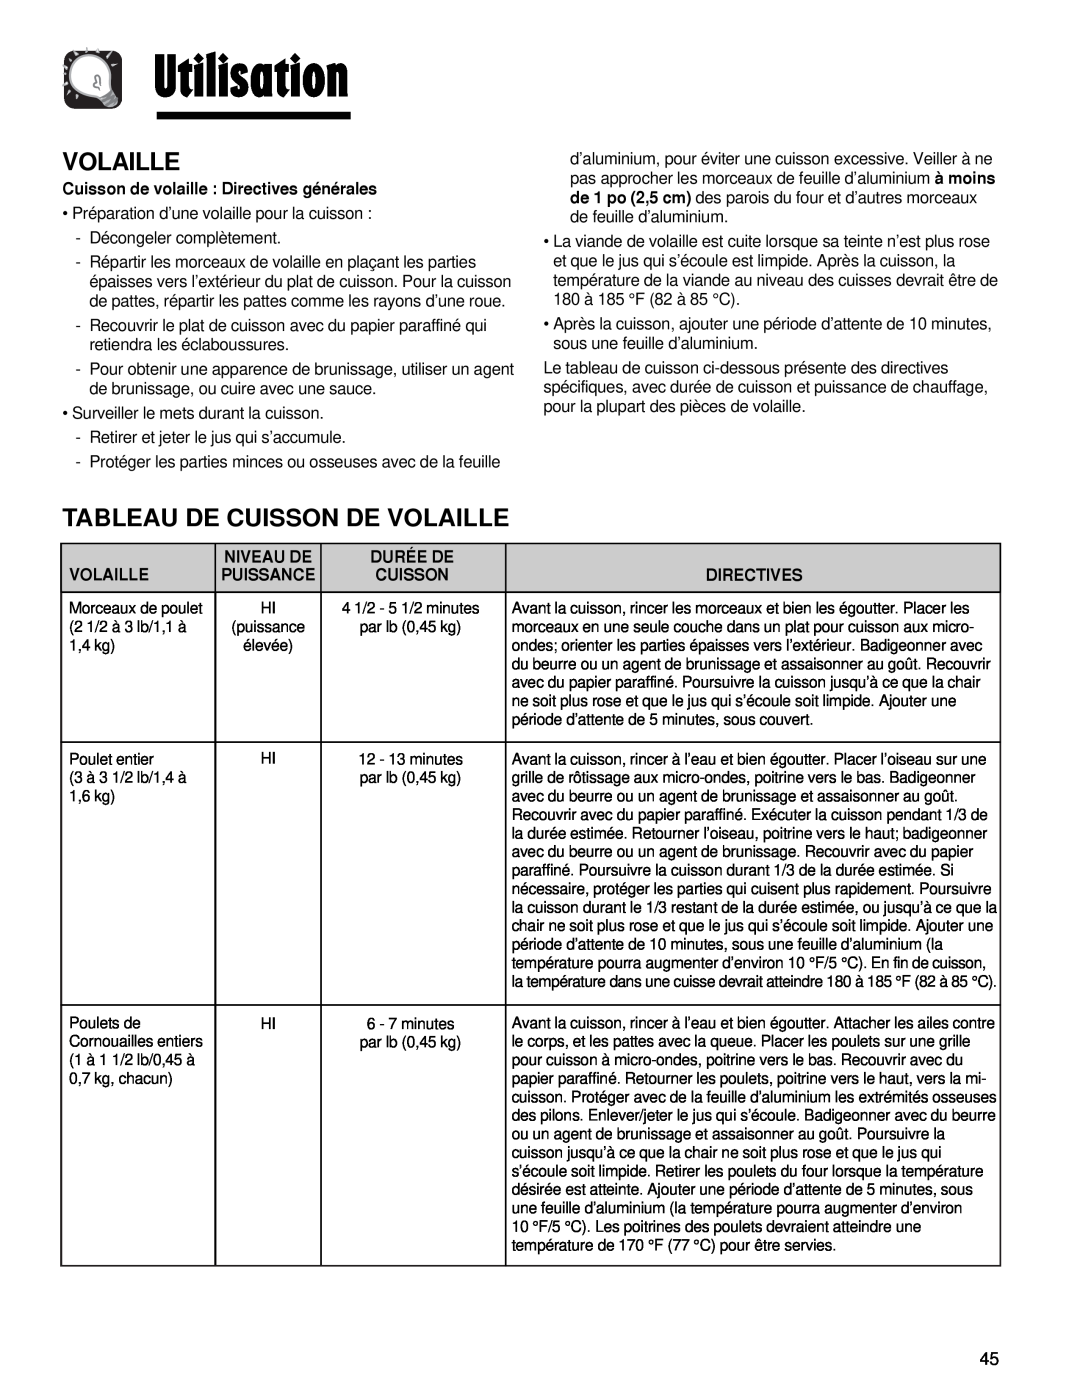 Maytag AMV5164AA, AMV5164AC important safety instructions Tableau De Cuisson De Volaille, Utilisation 